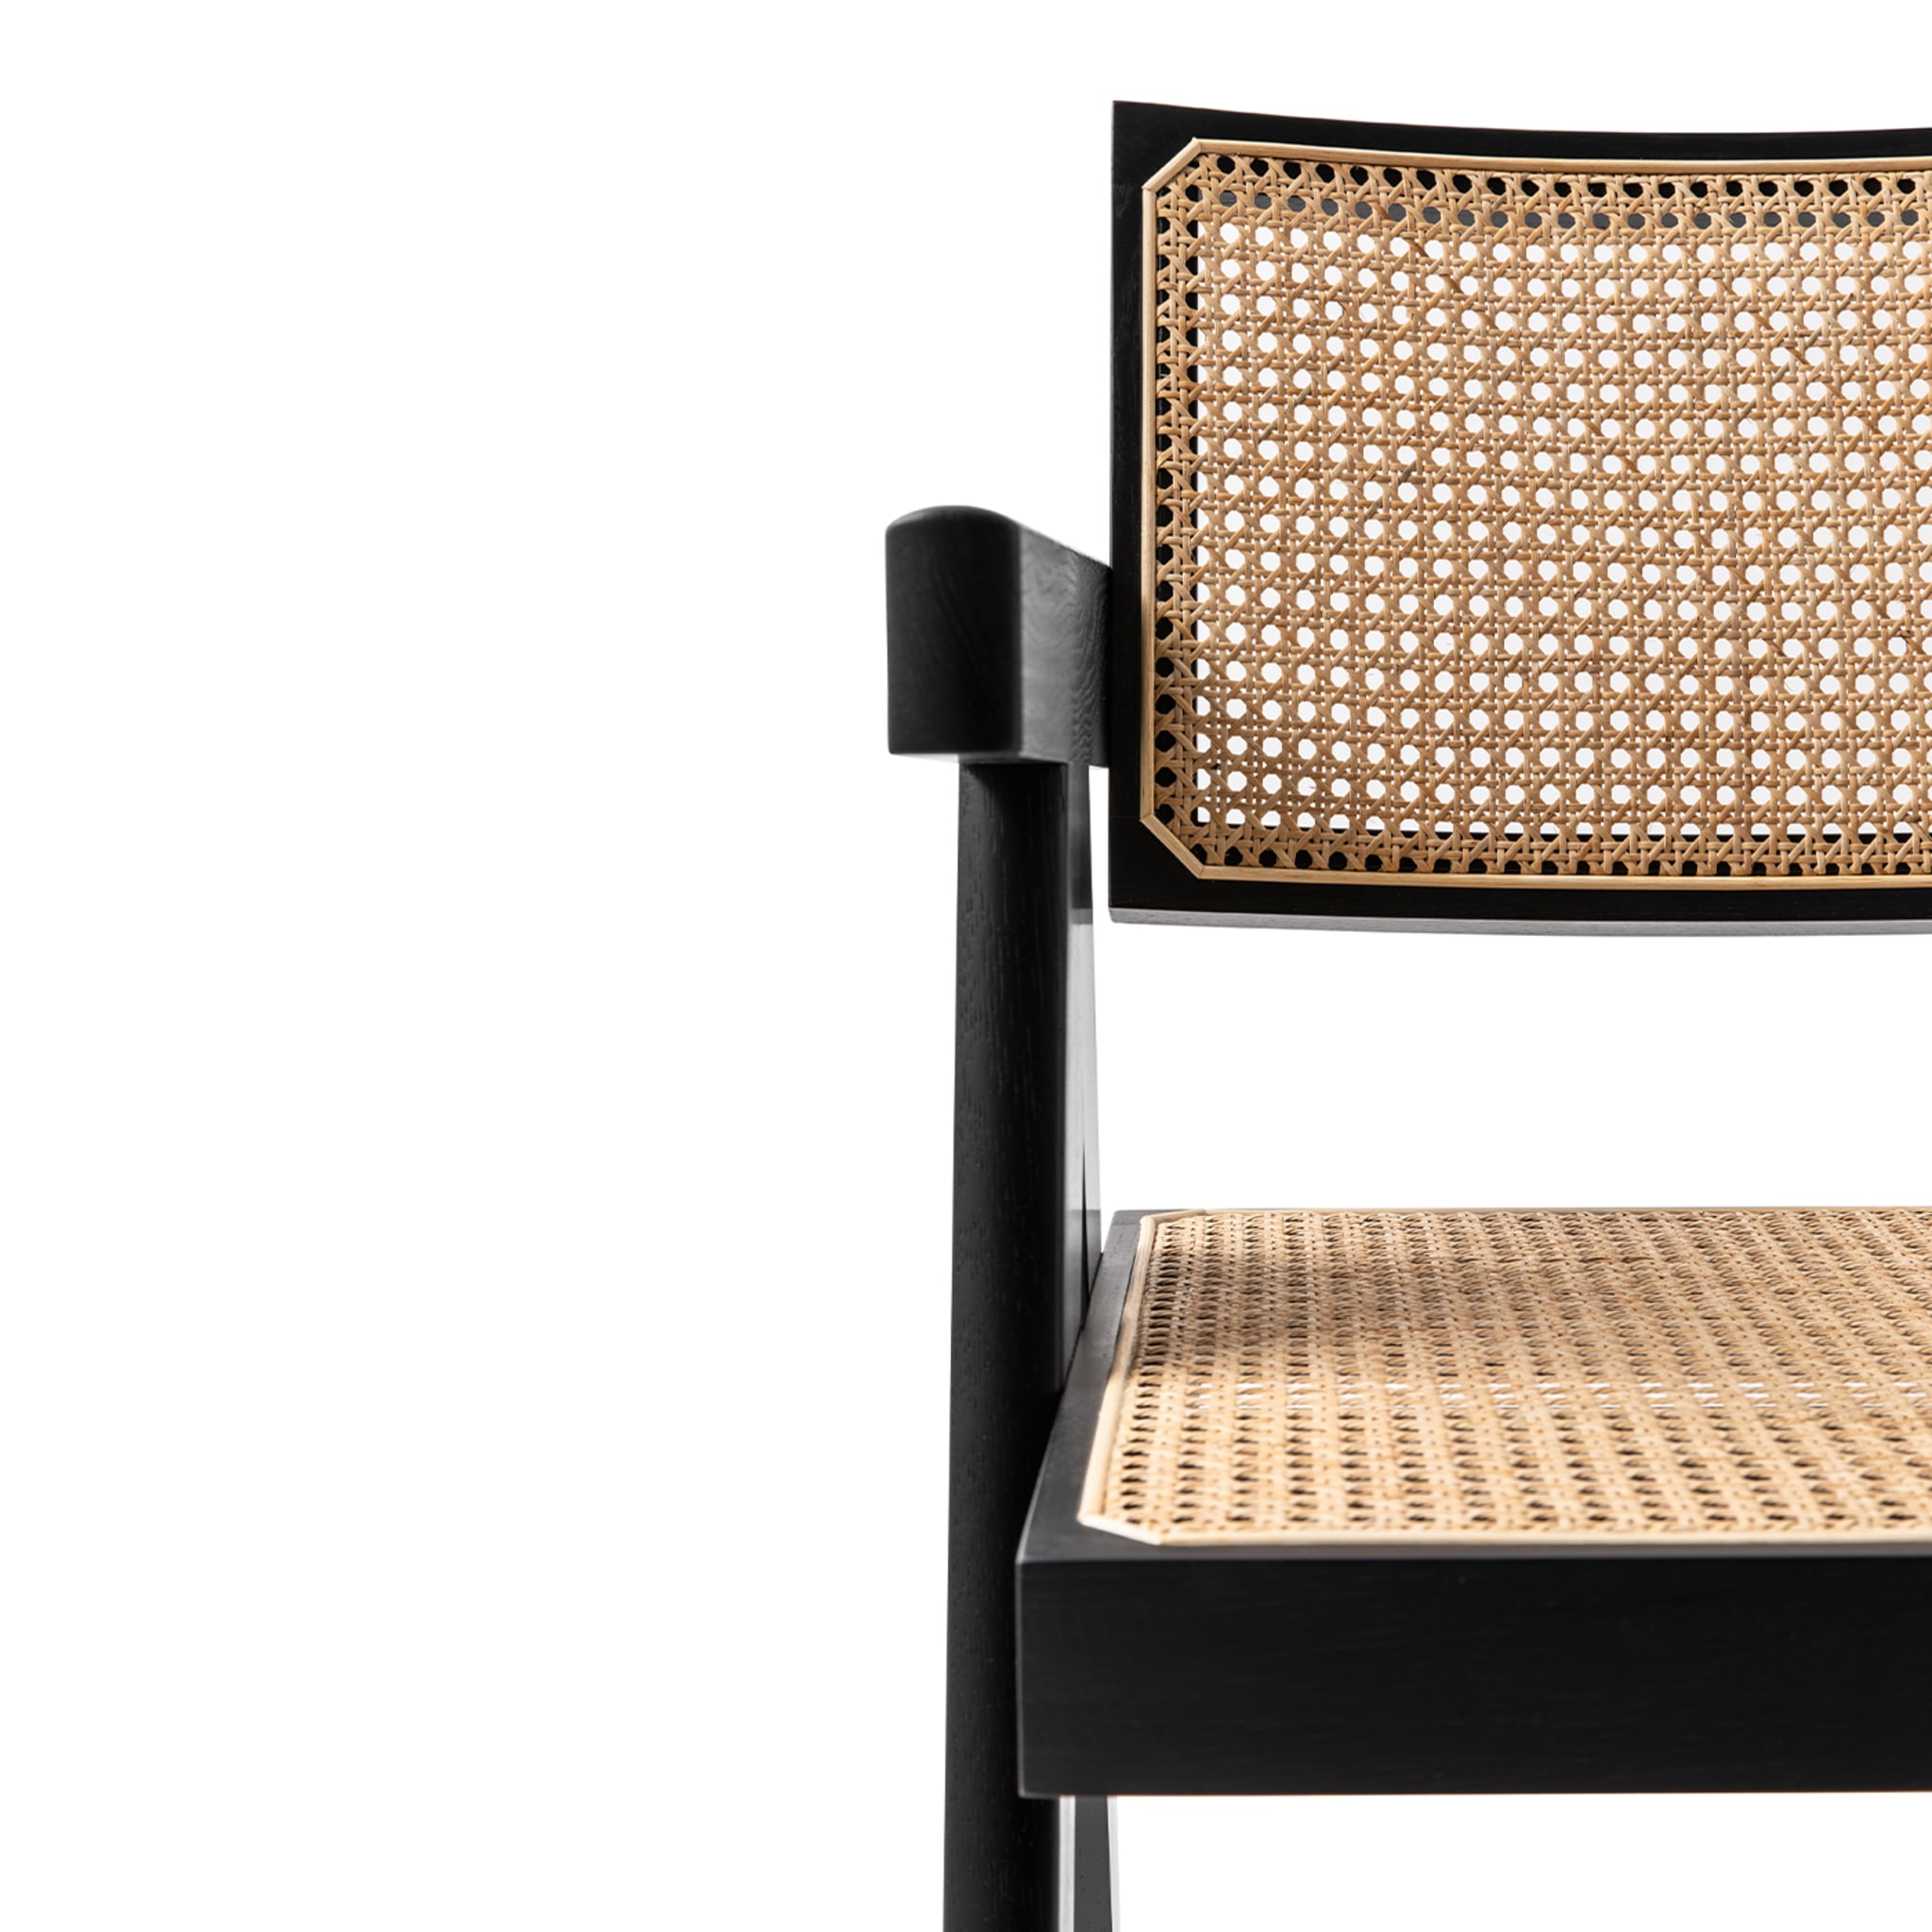 Capitol Complex Office Chair, Hommage à Pierre Jeanneret – Vienna Straw Seat - Alternative view 1